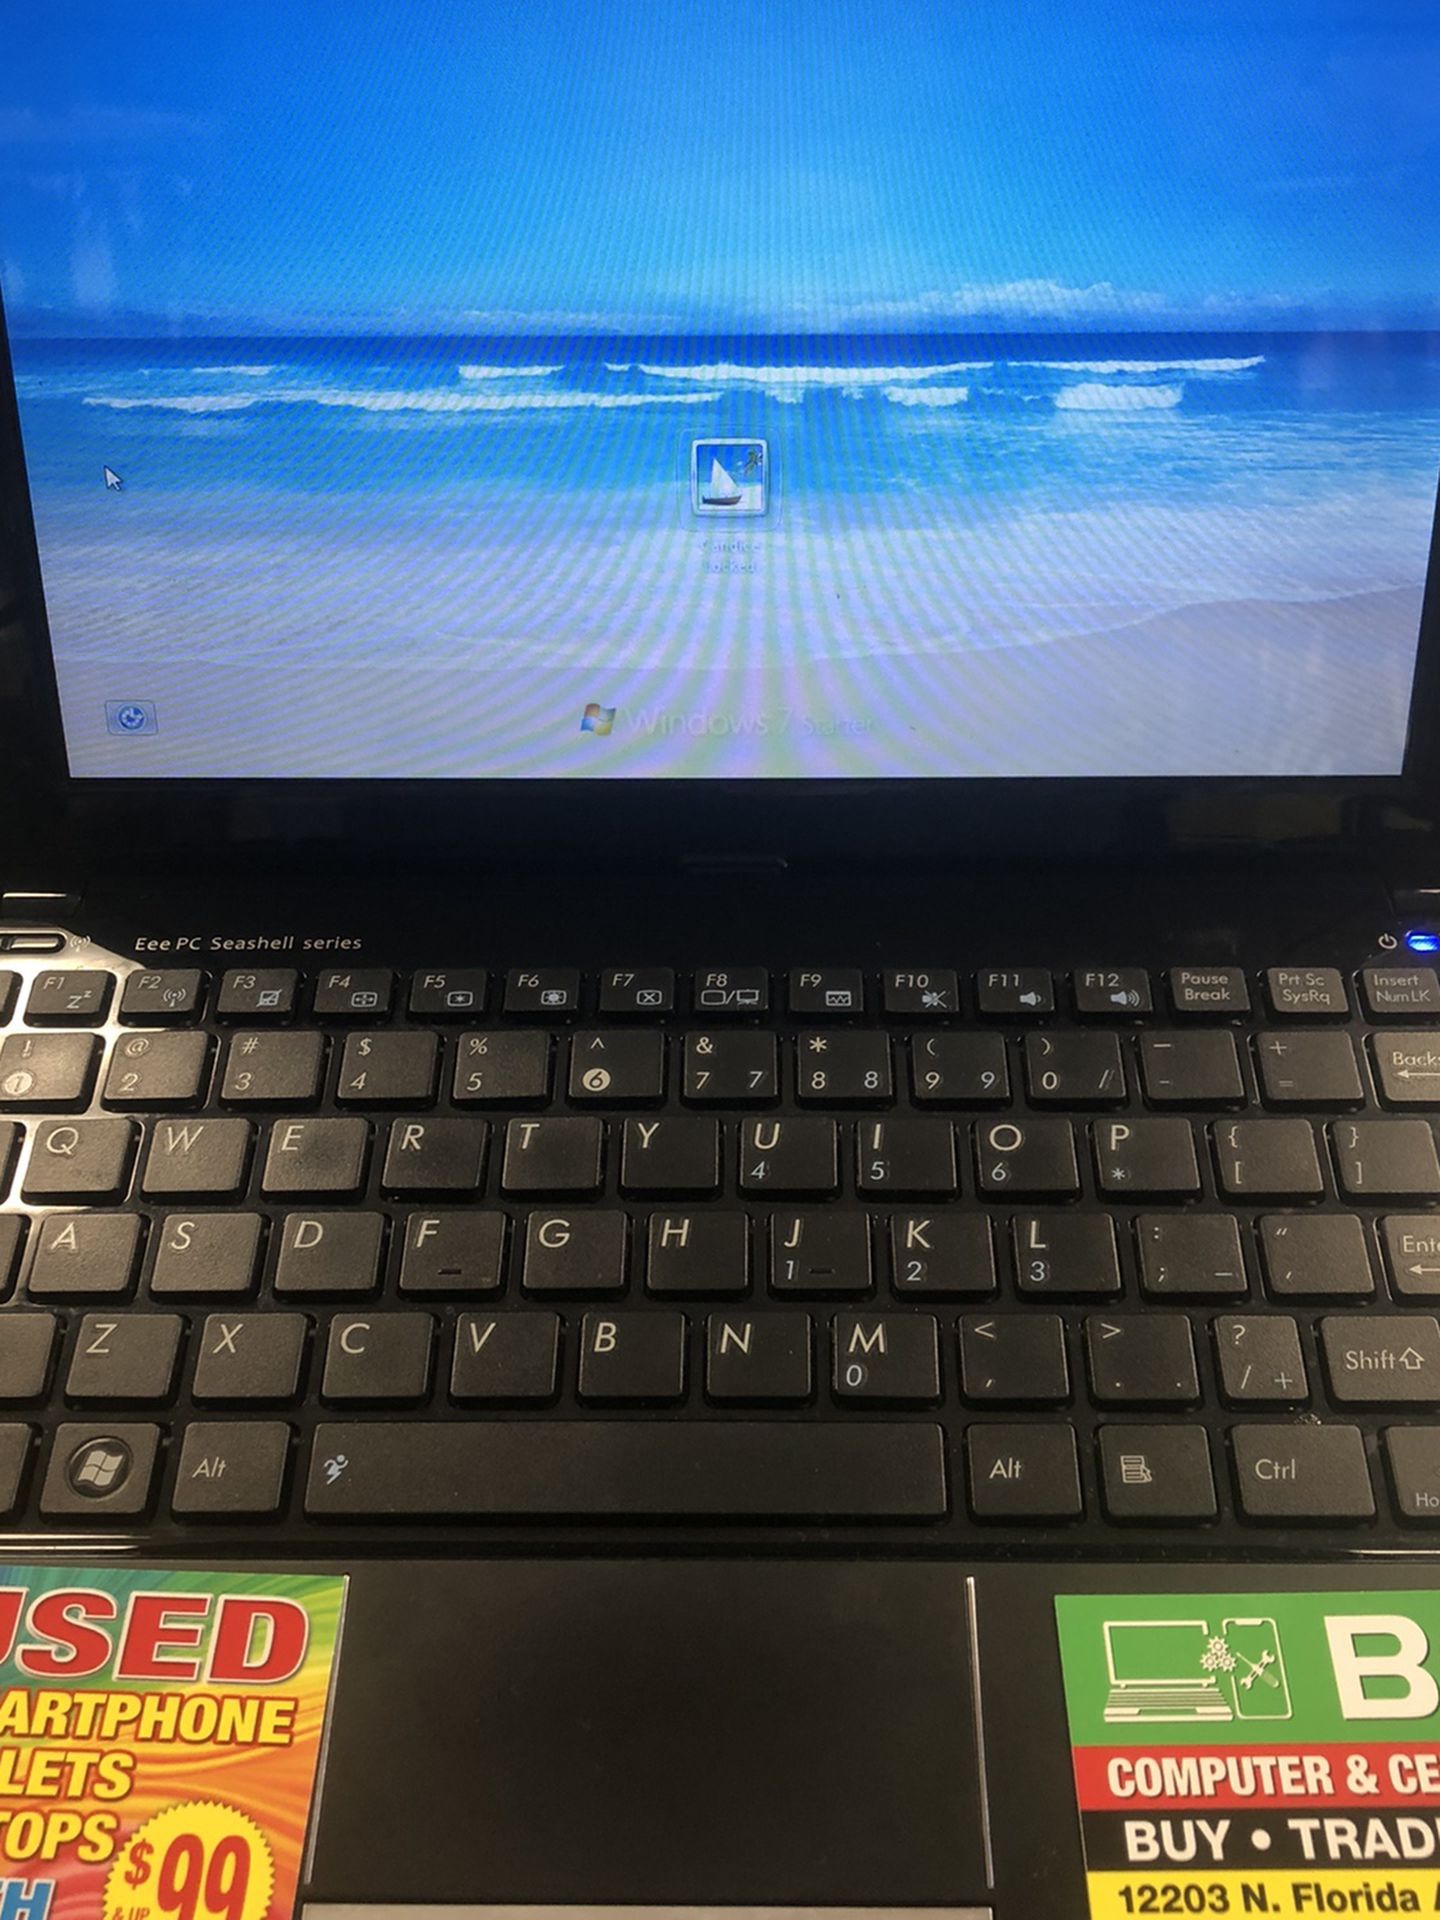 Laptop Mini Asus Windows 10 Pro